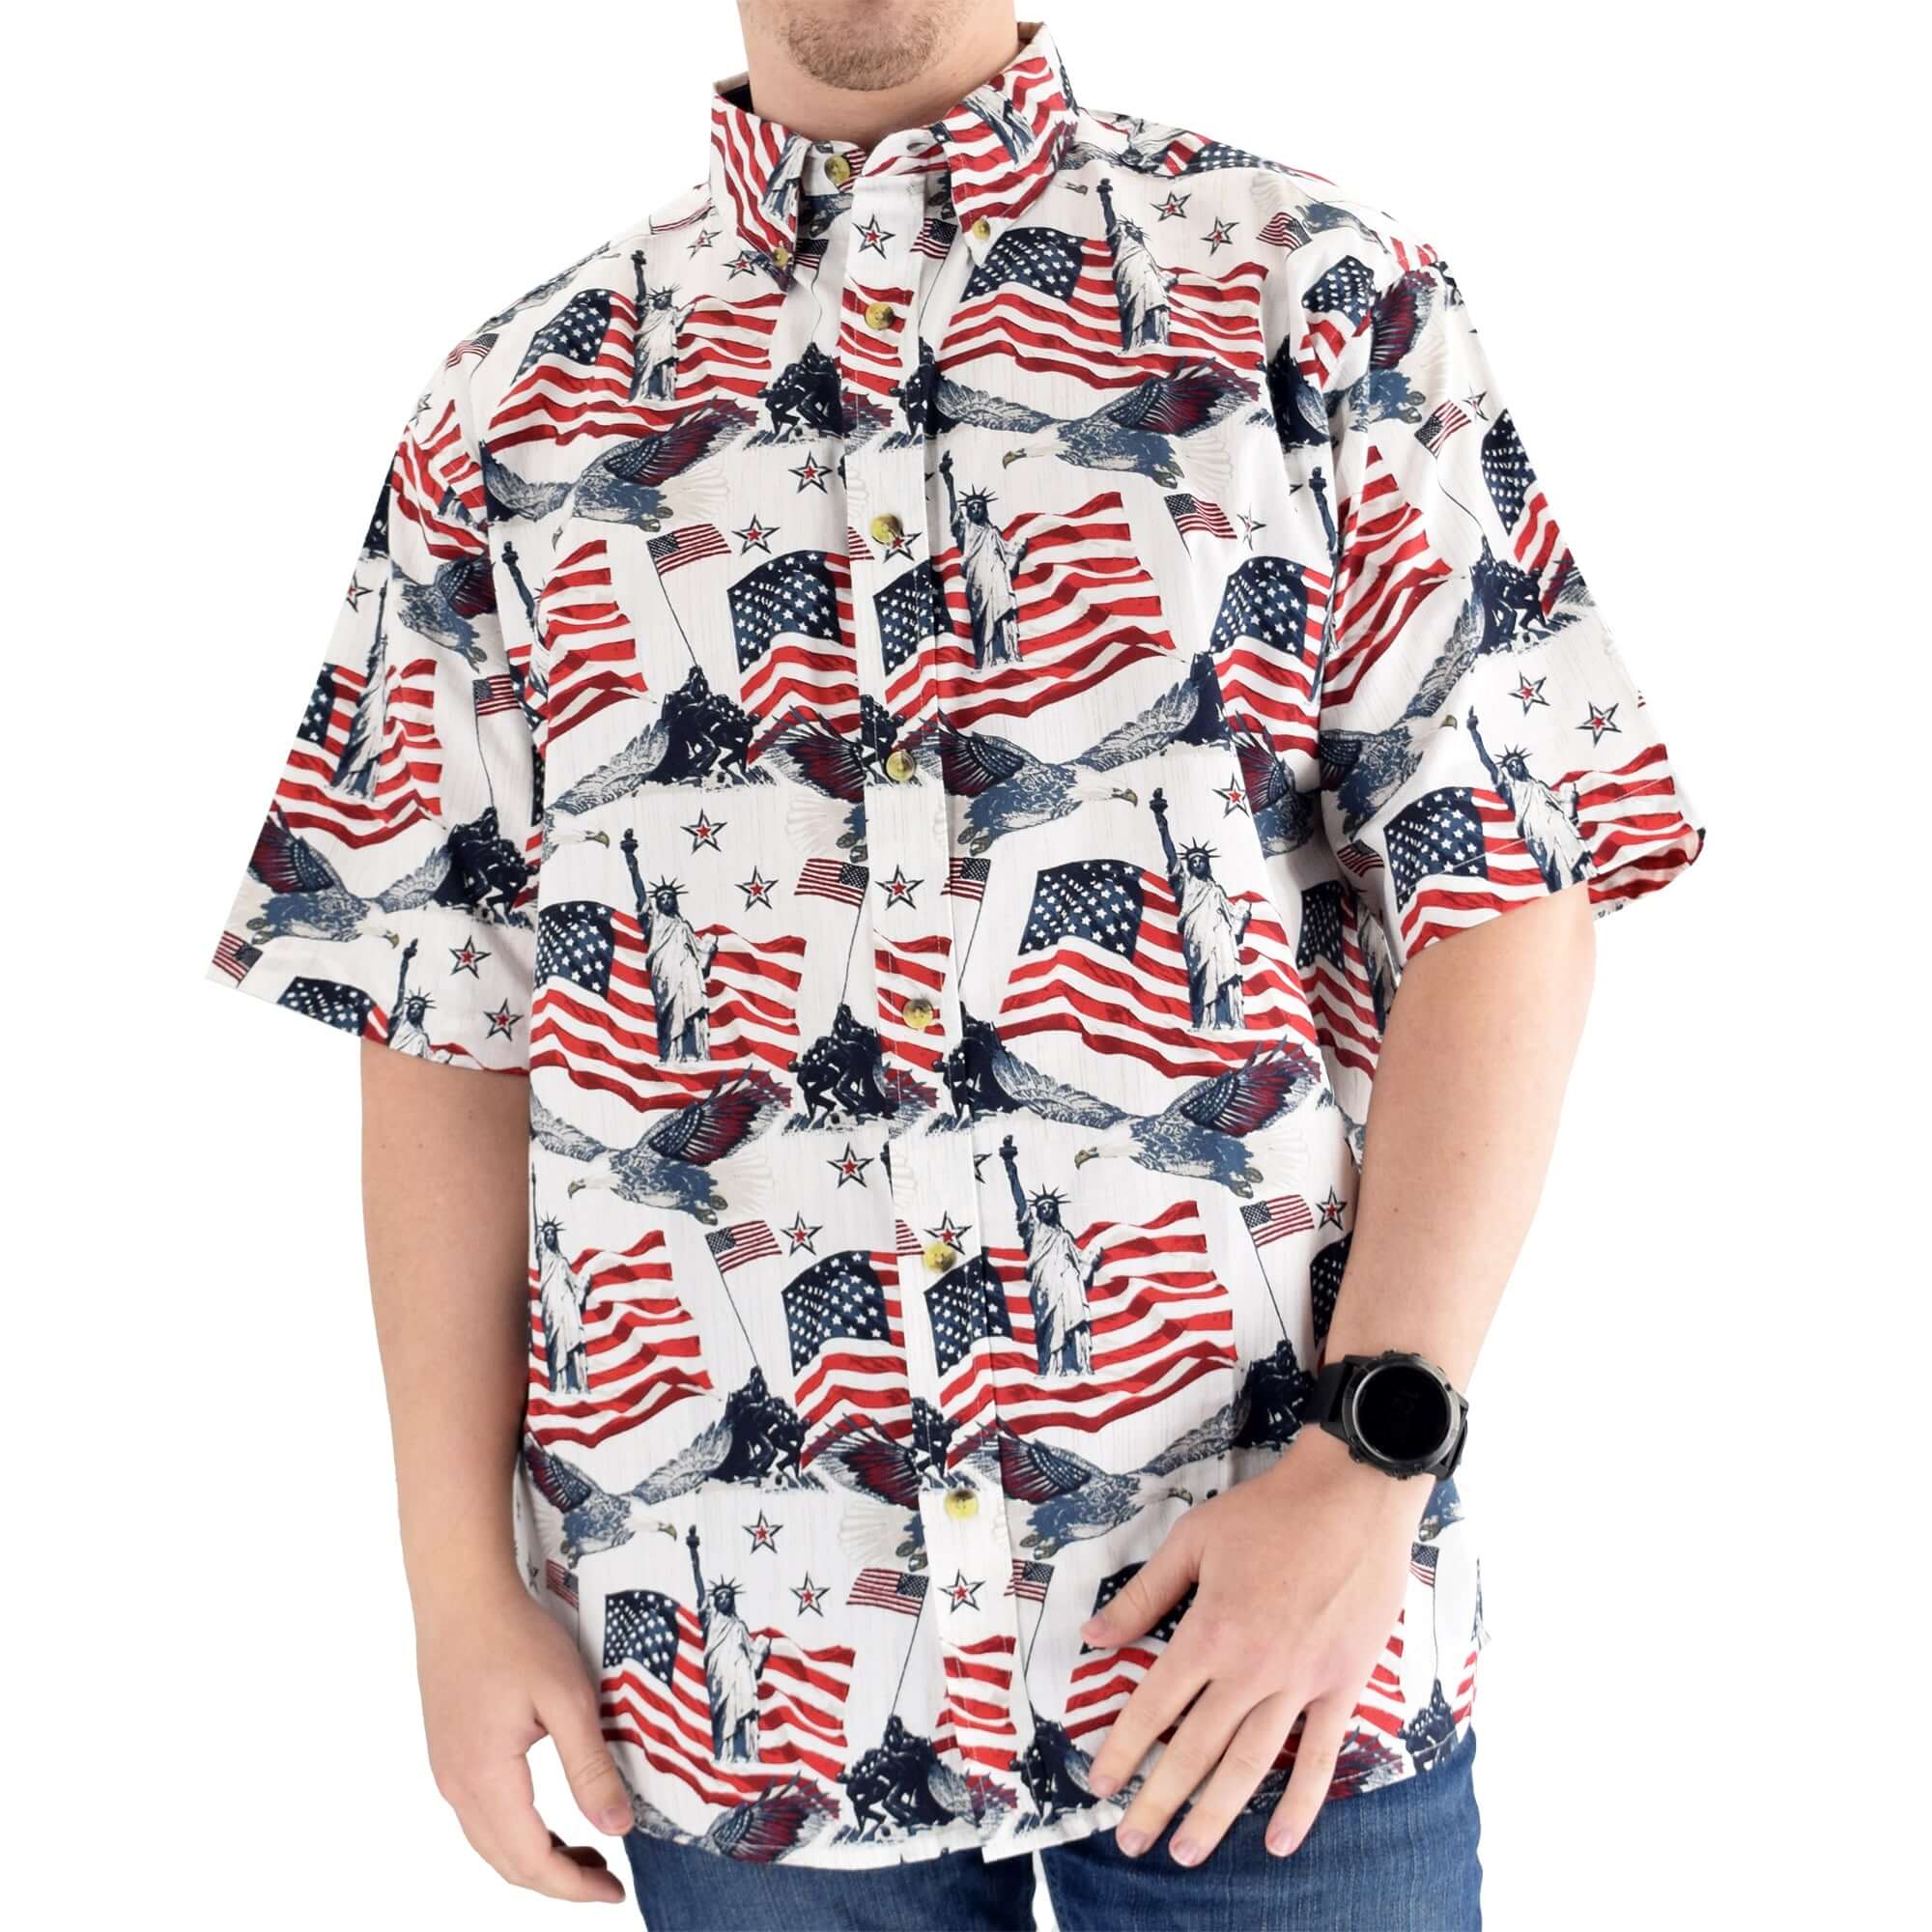 Men's Woven Button-Up Flags & Statue Shirt - the flag shirts